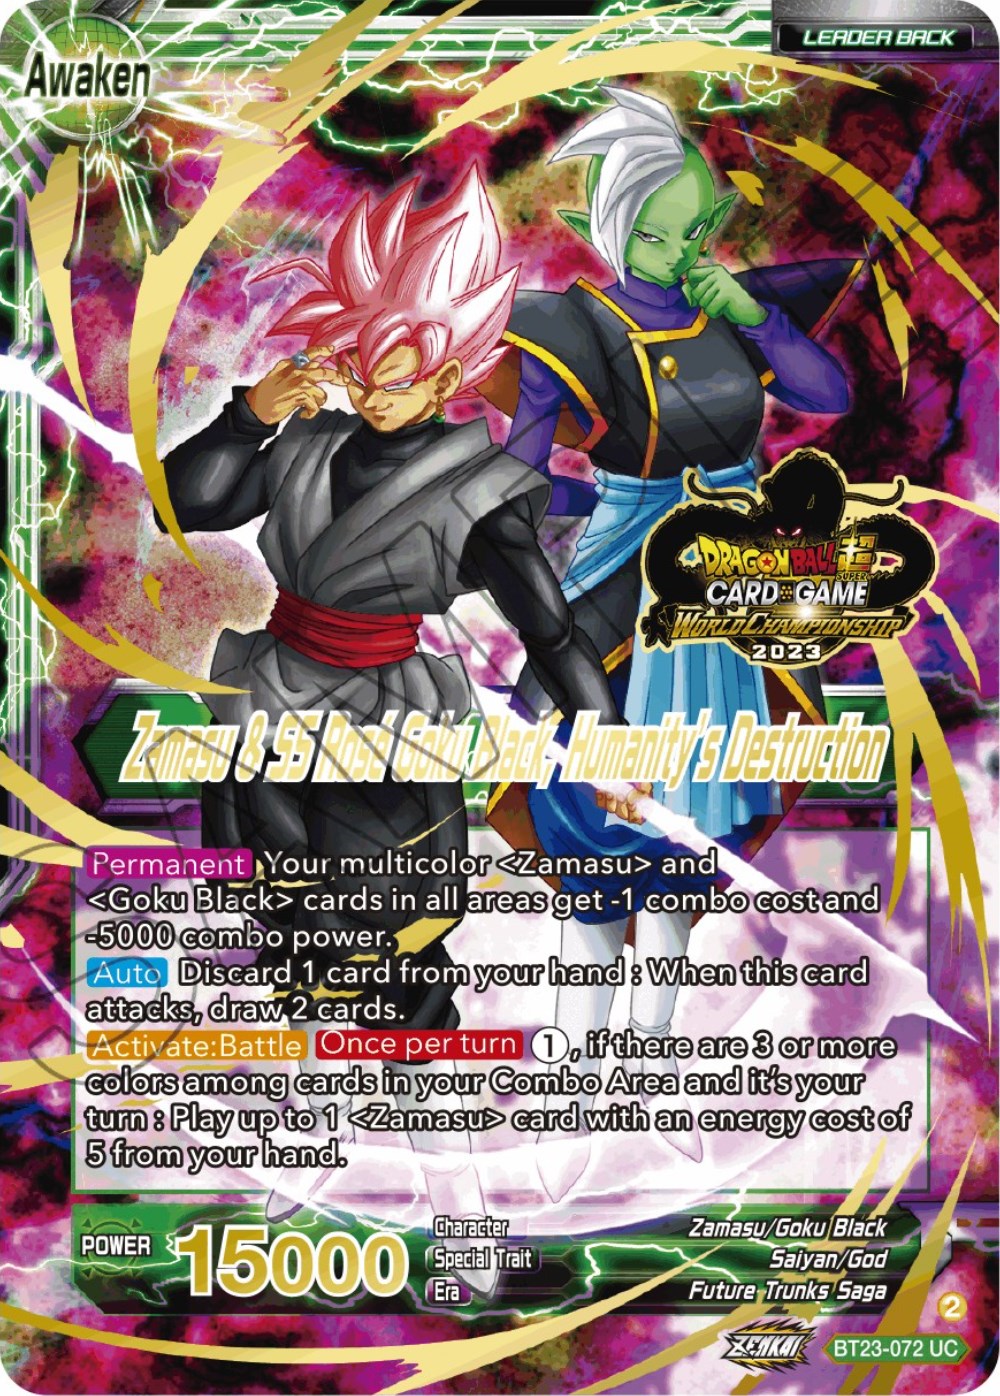 Zamasu & Goku Black // Zamasu & SS Rose Goku Black, Humanity's Destruction (2023 Worlds ZENKAI 06 Leader Set) (BT23-072) [Tournament Promotion Cards] | North Valley Games